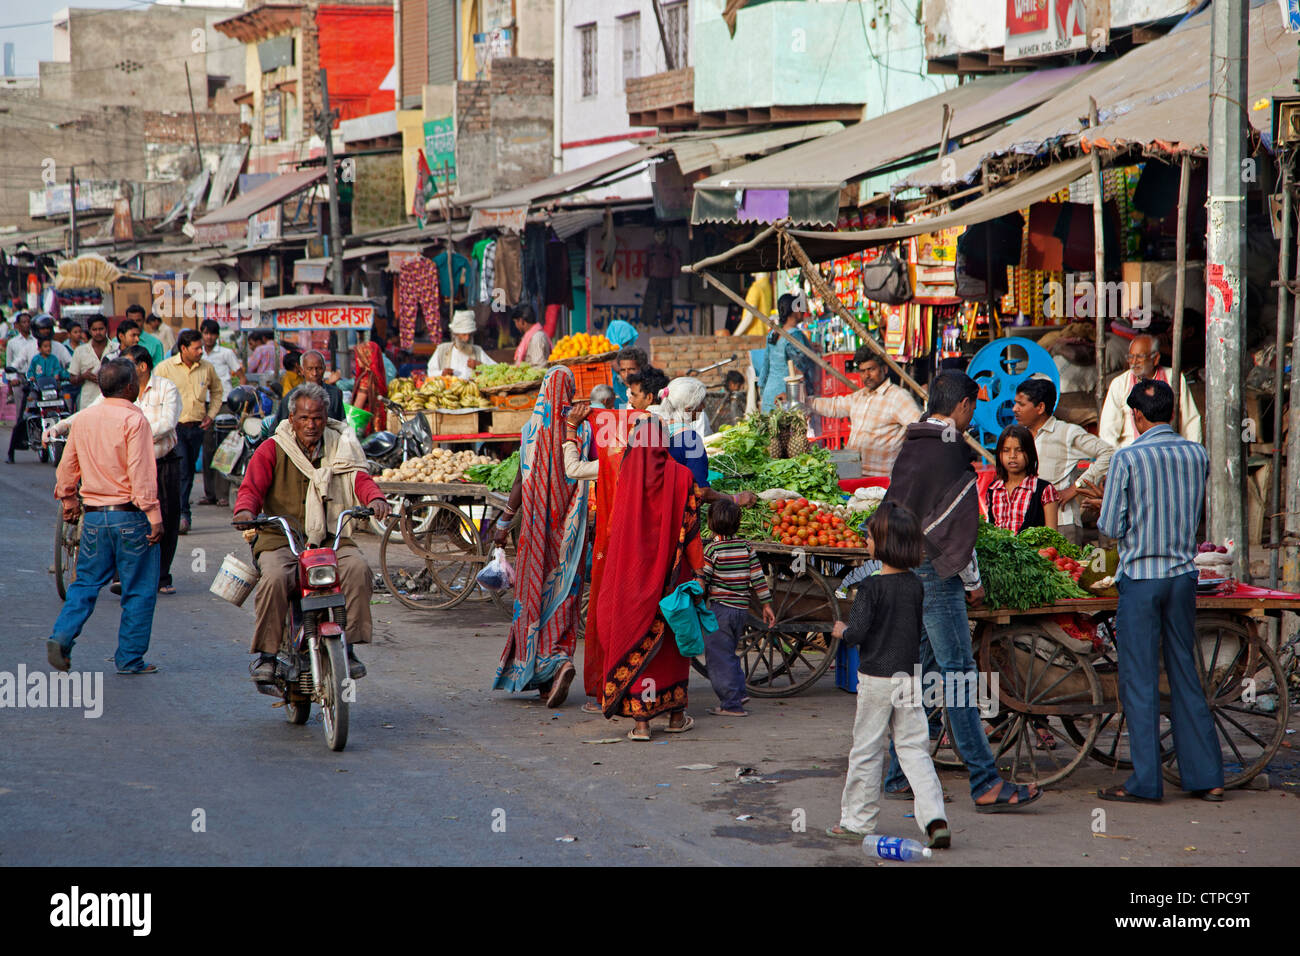 Vendors selling fruit and vegetables on the street in Mathura, Uttar Pradesh, India Stock Photo